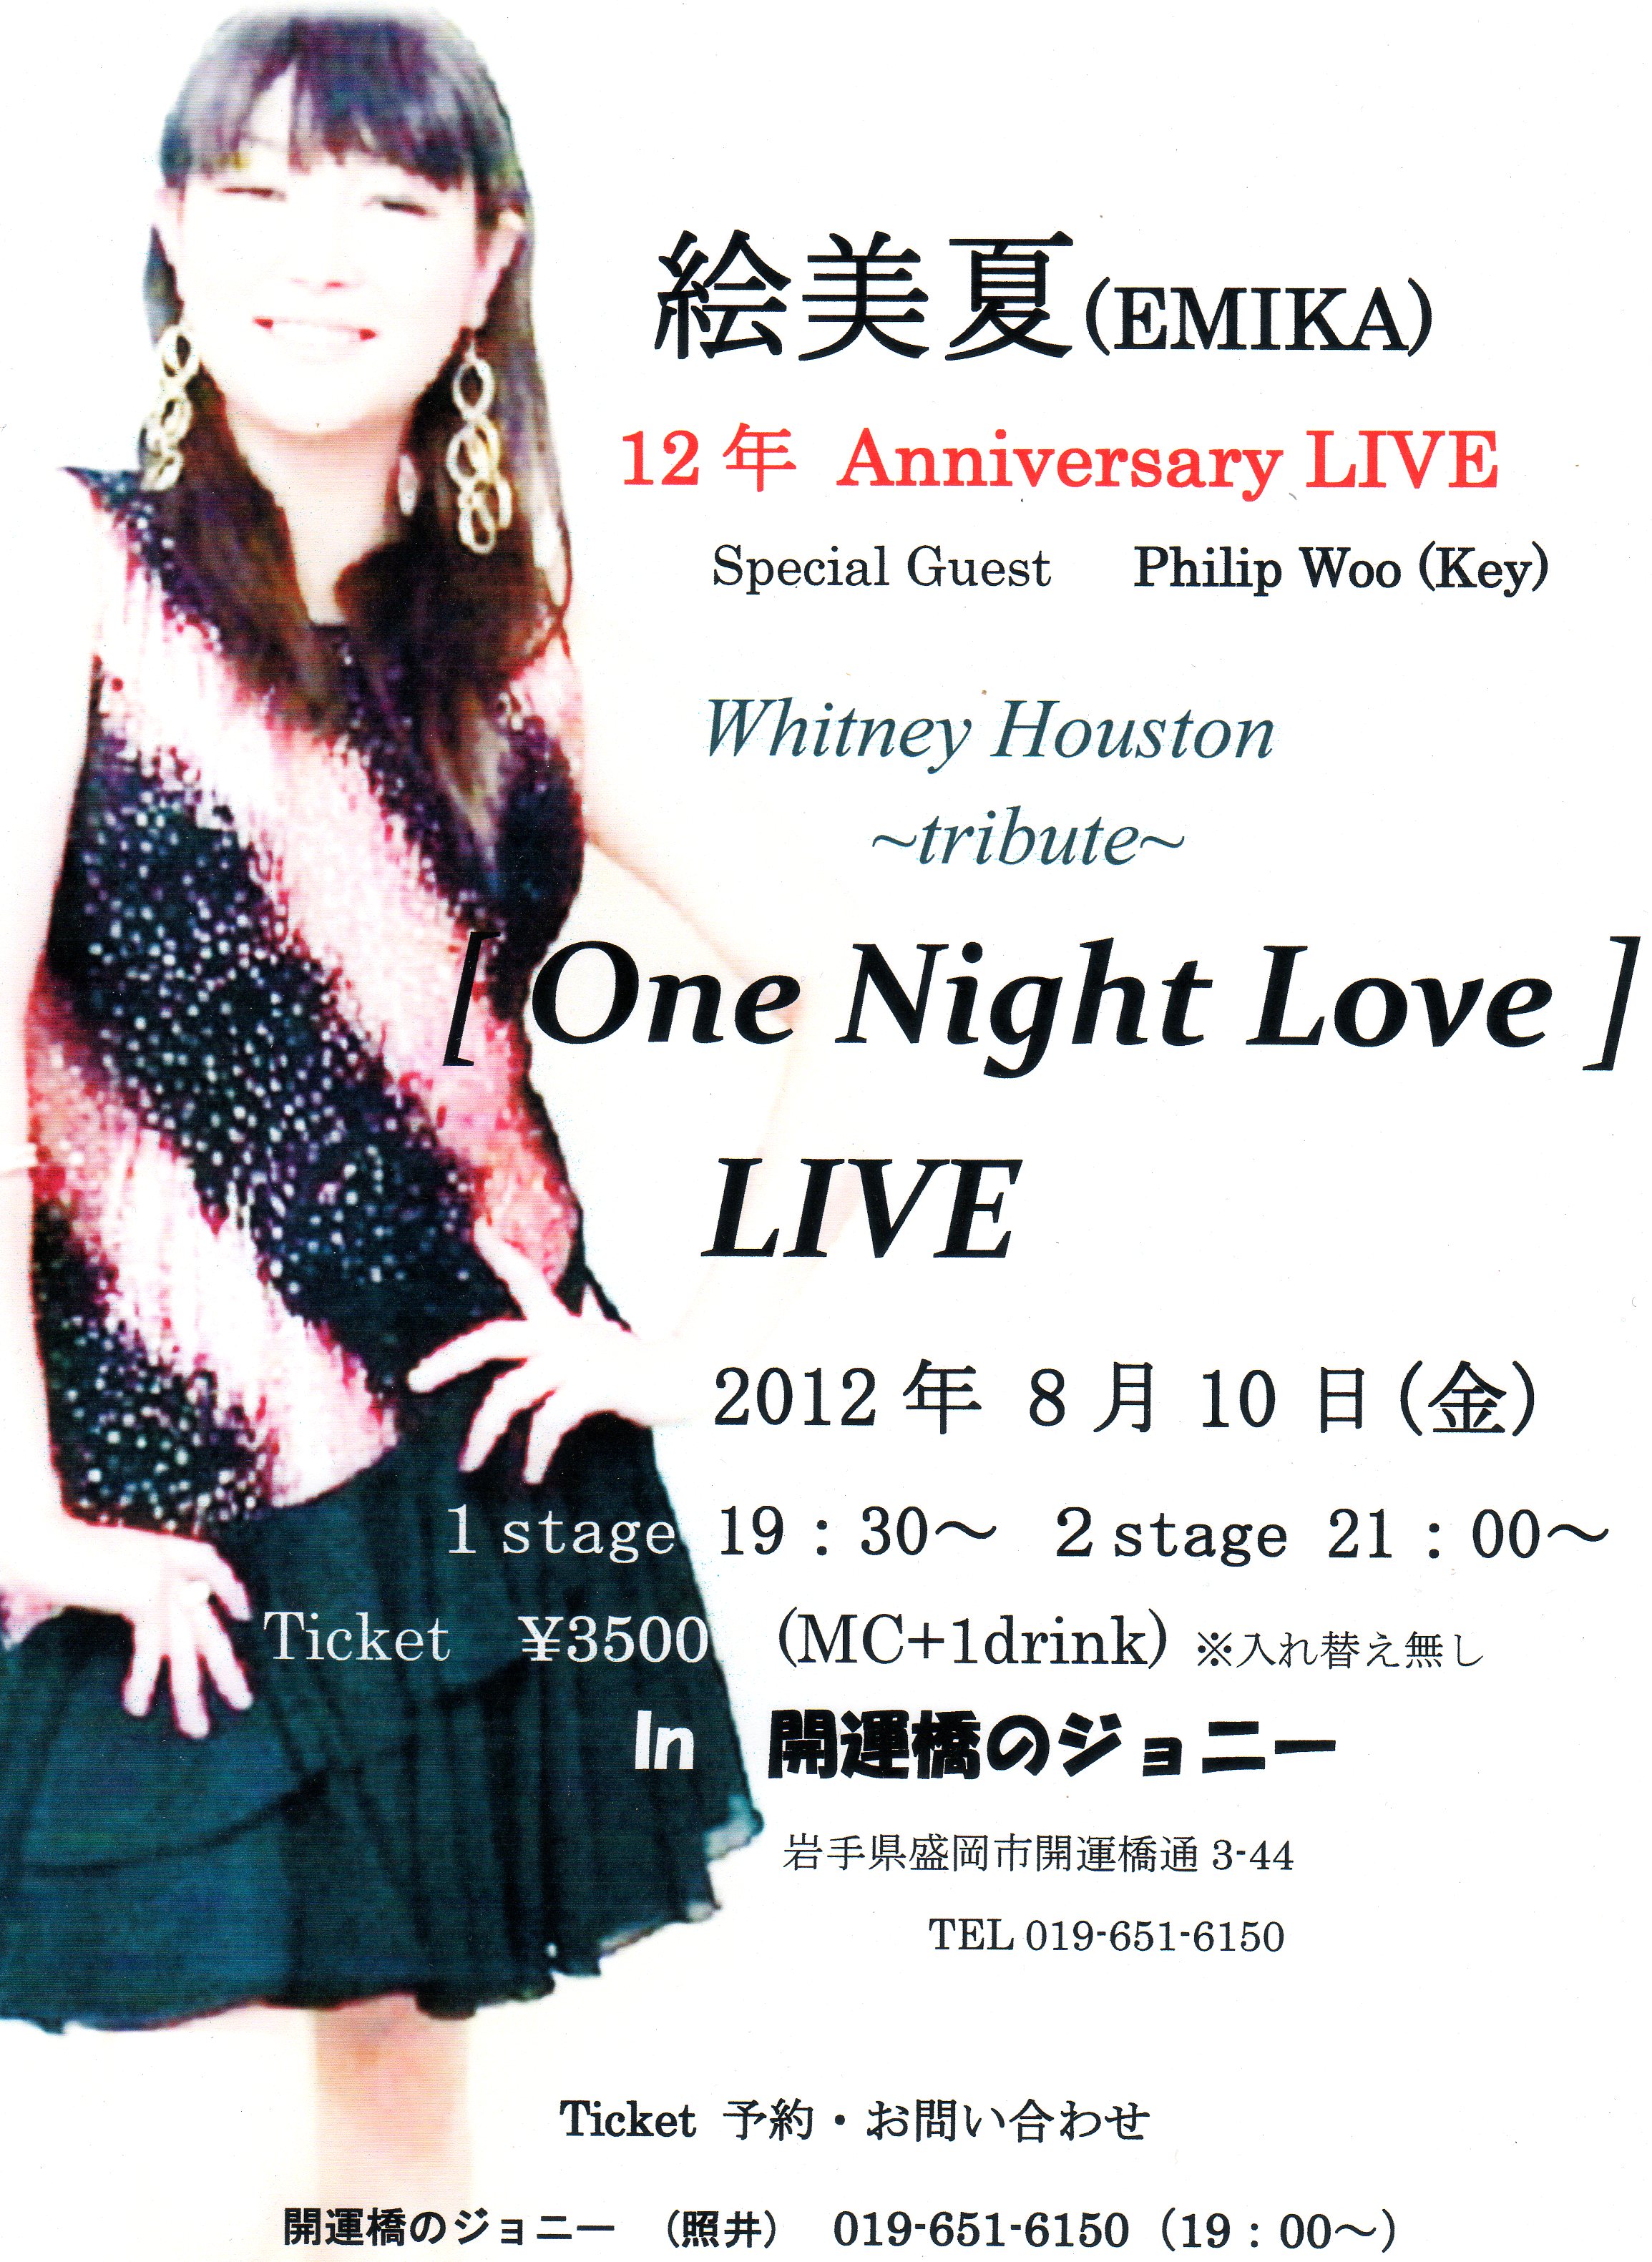 [ One Night Love ] LIVE 　Whitney Houston~tribute~